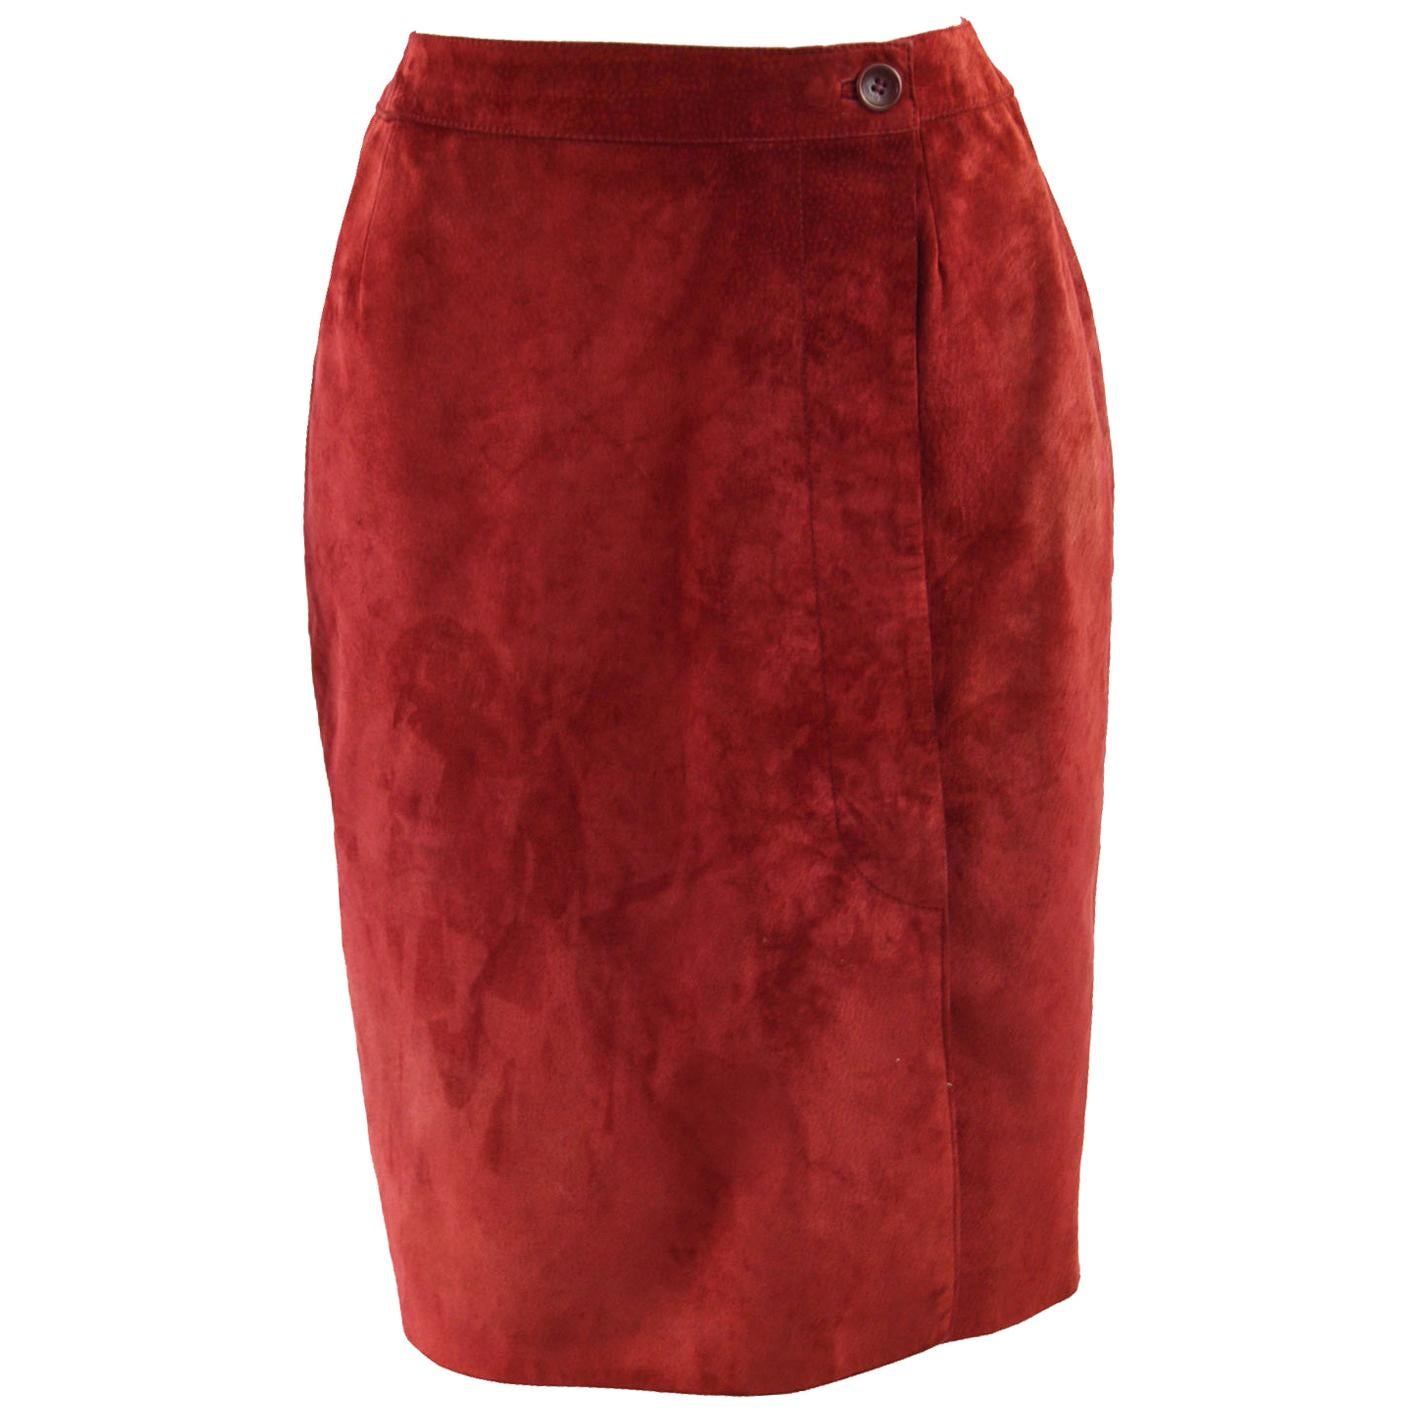 Vintage Suede Skirt - 20 For Sale on 1stDibs | 70s suede skirt